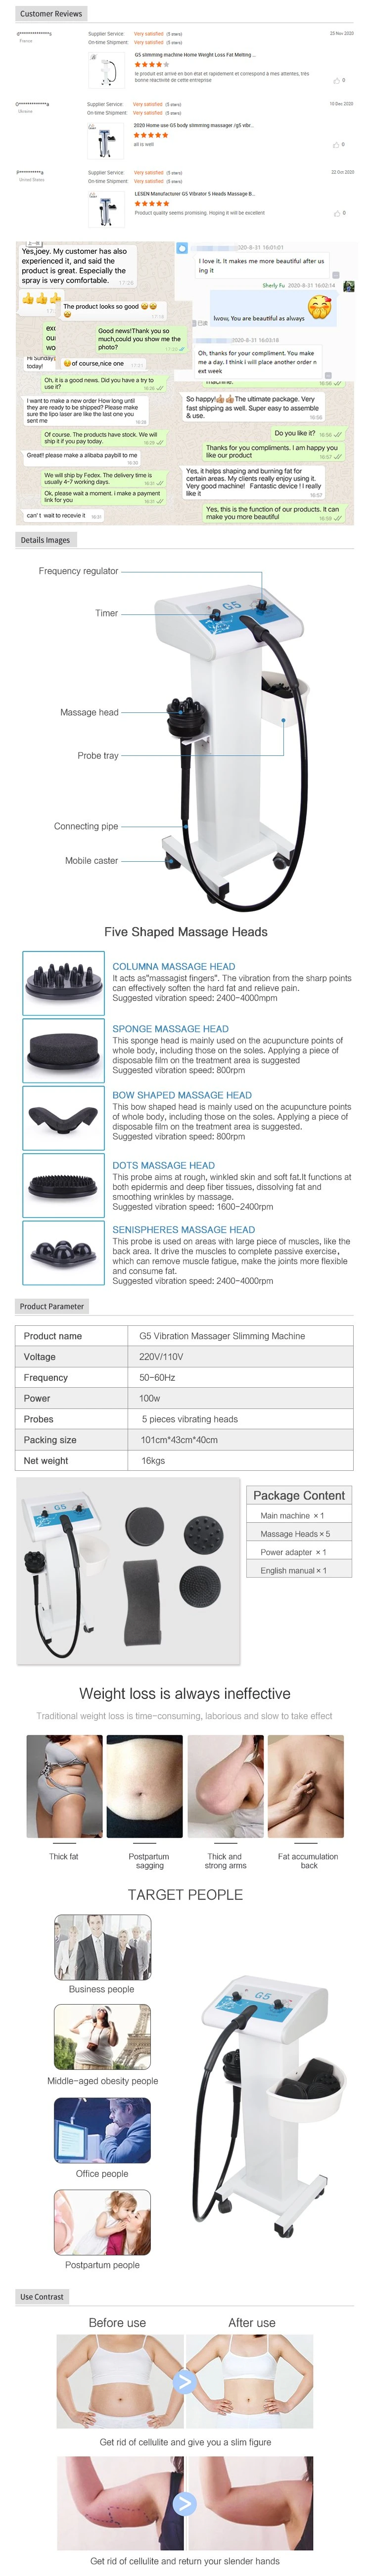 Popular G5 Body Vibrator/Fat Reduction Massager Body Slimming Machine